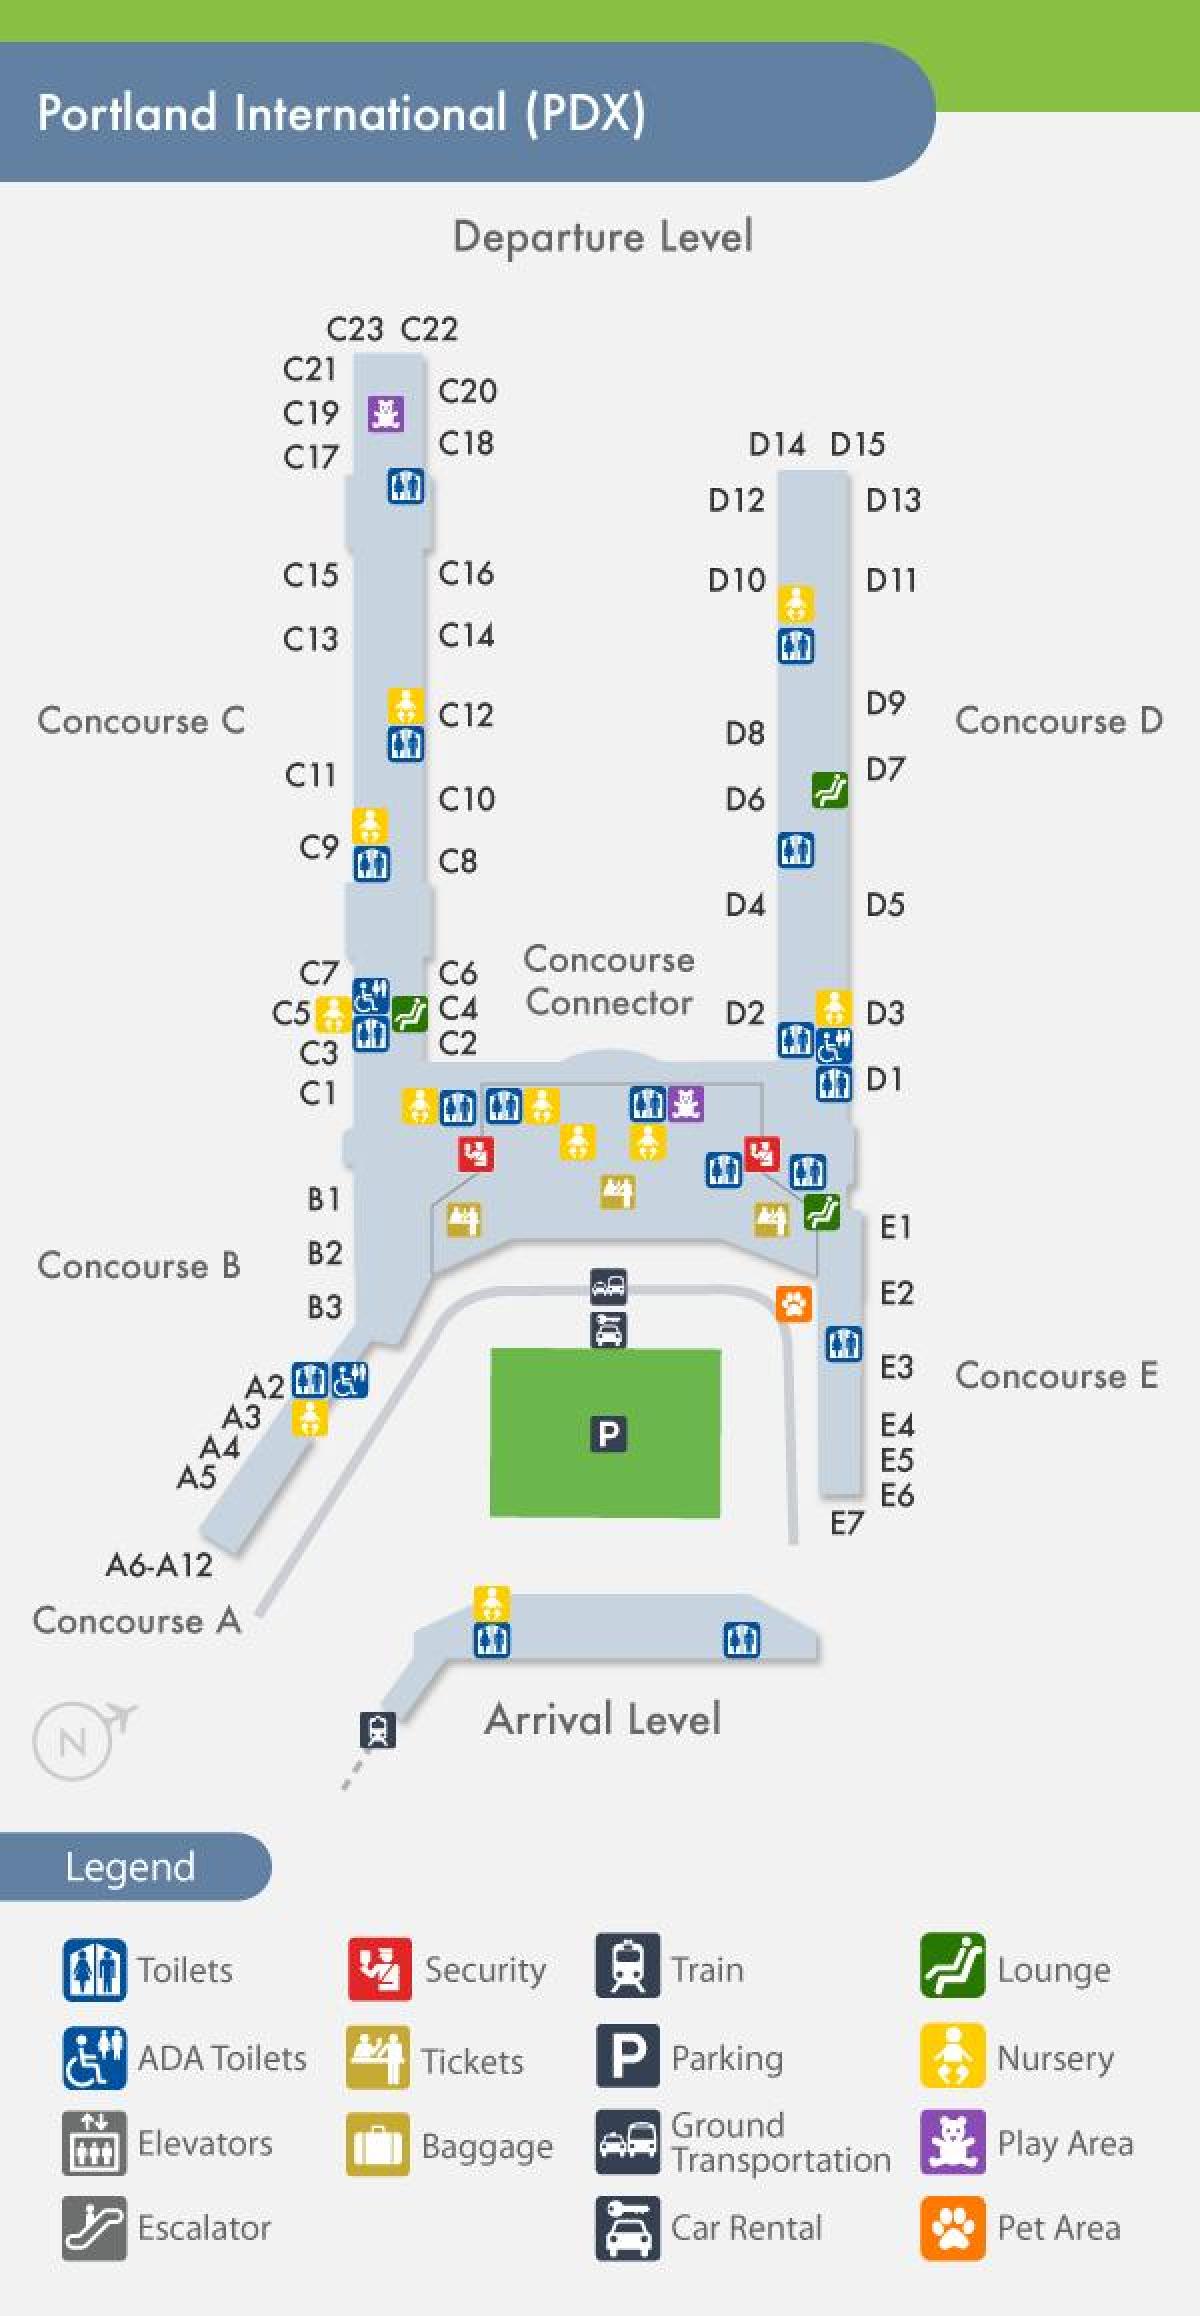 PDX harta e aeroportit